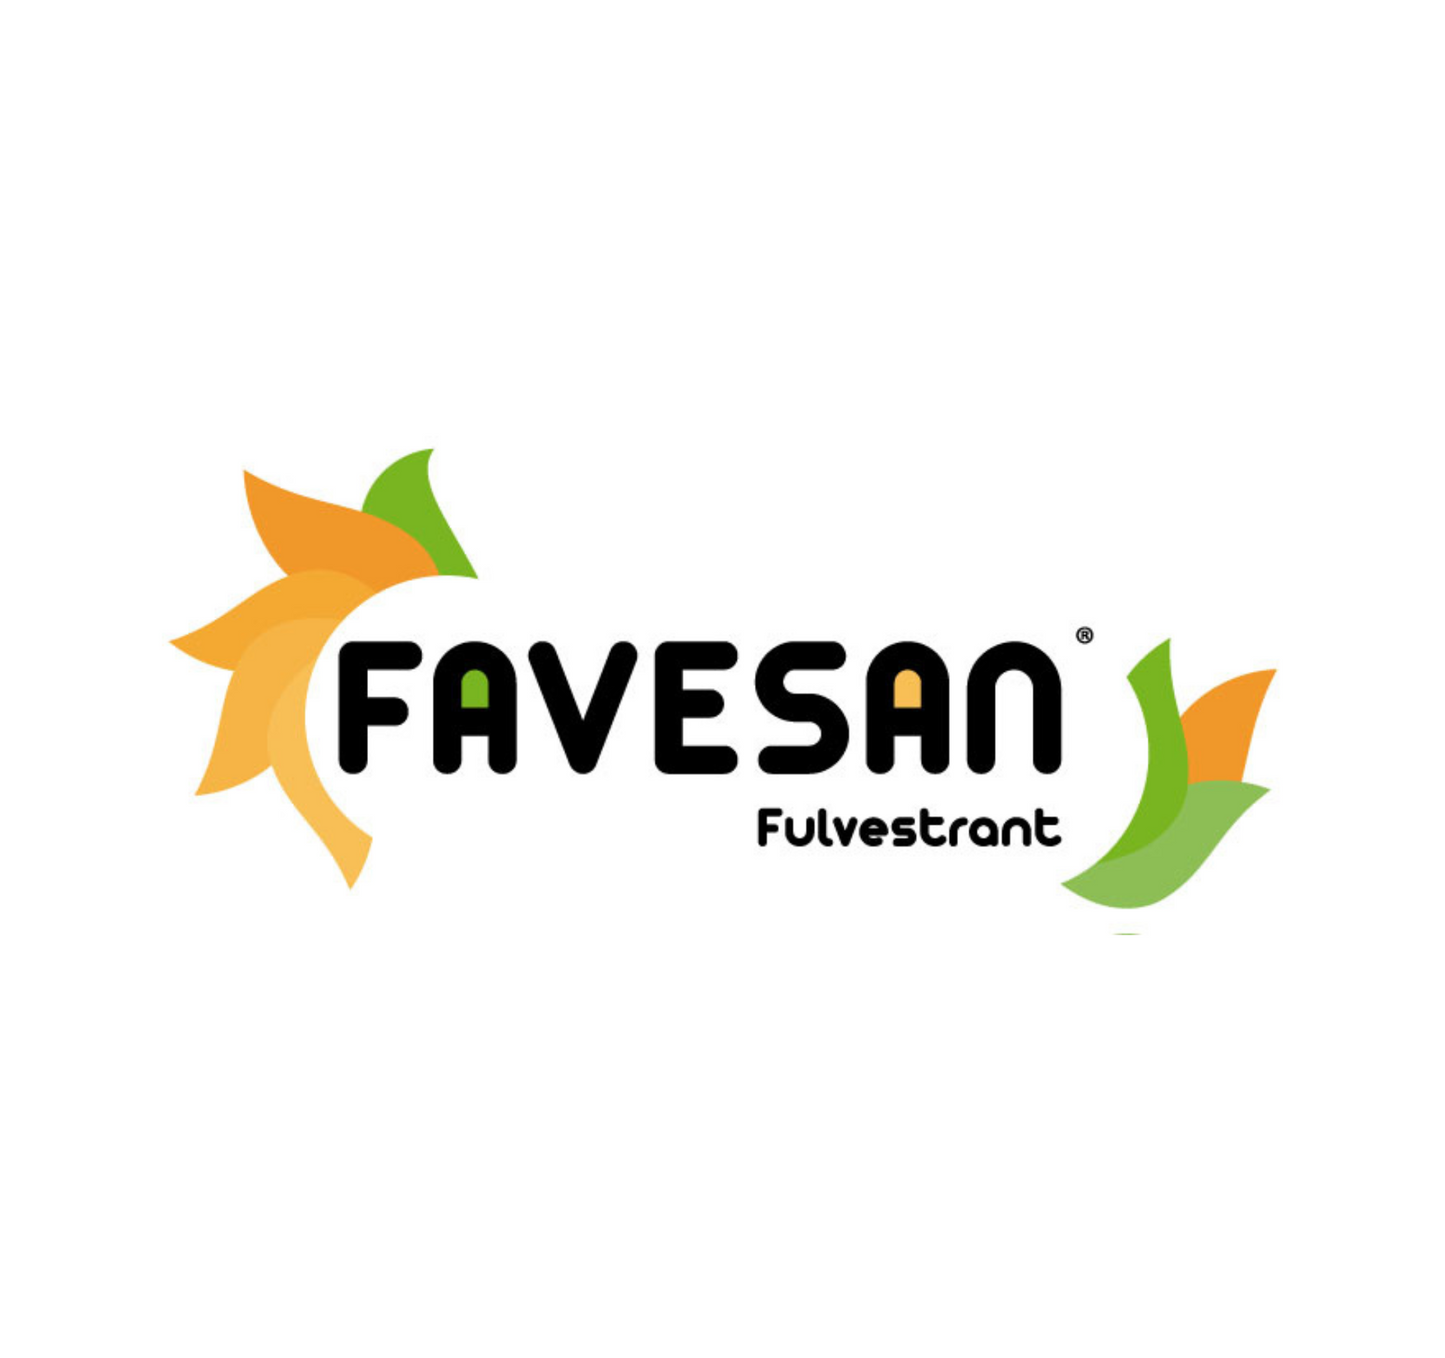 FAVESAN - FULVESTRANT